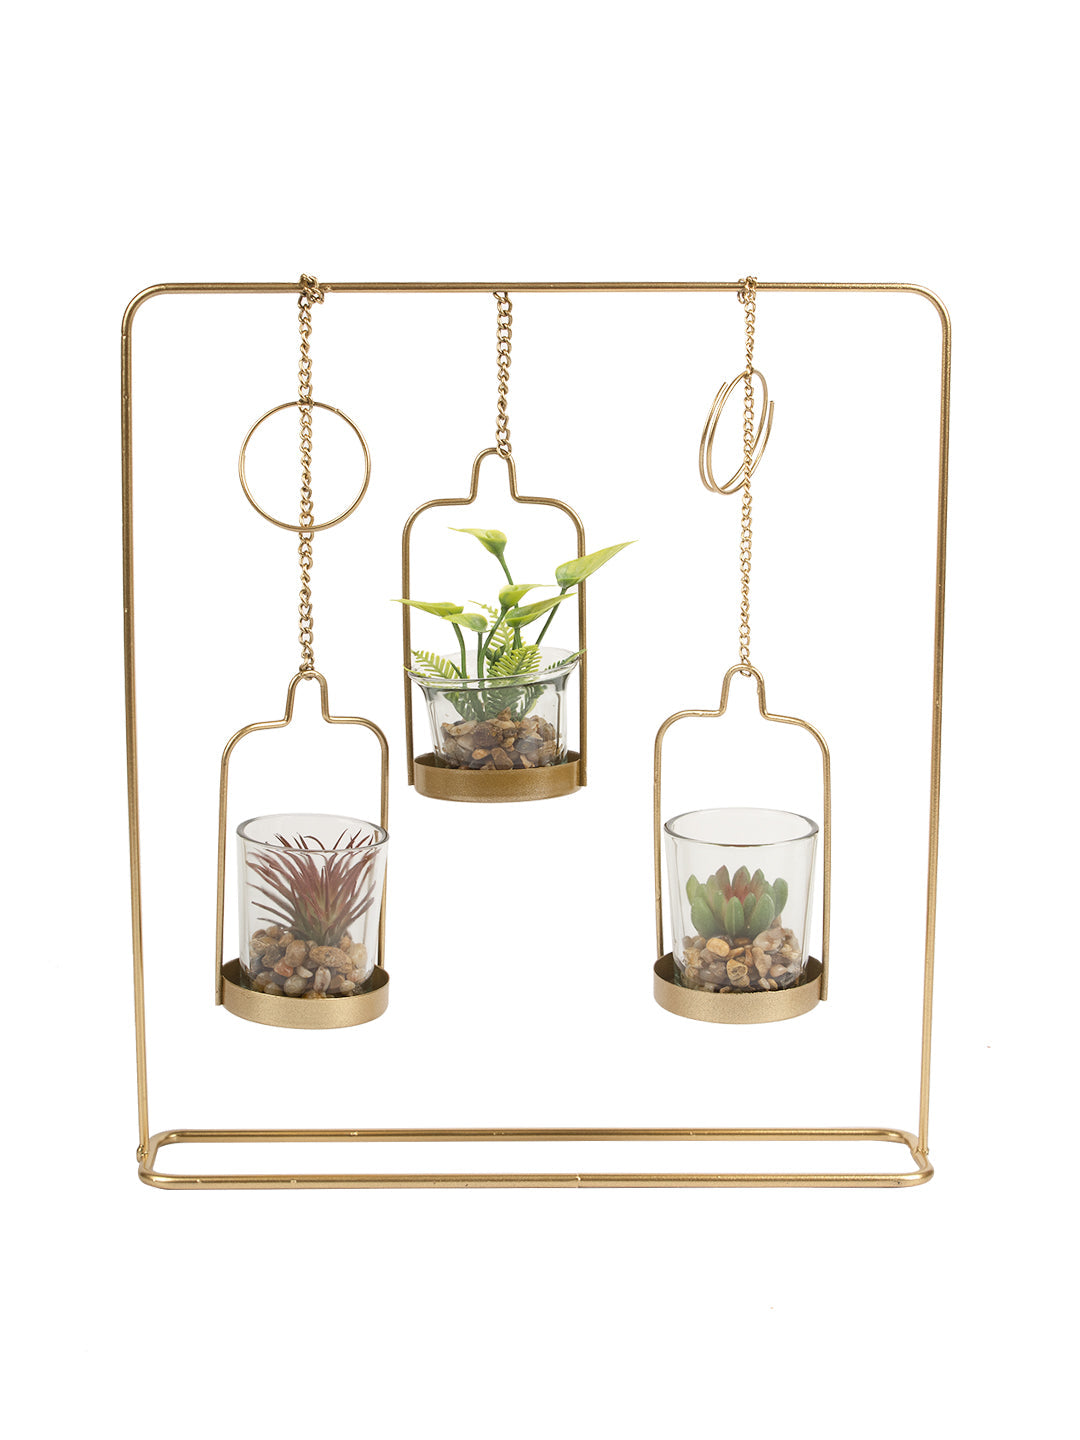 VON CASA Home Decor Table Centerpiece Planter holder  With 3 Glass Plants Vostive